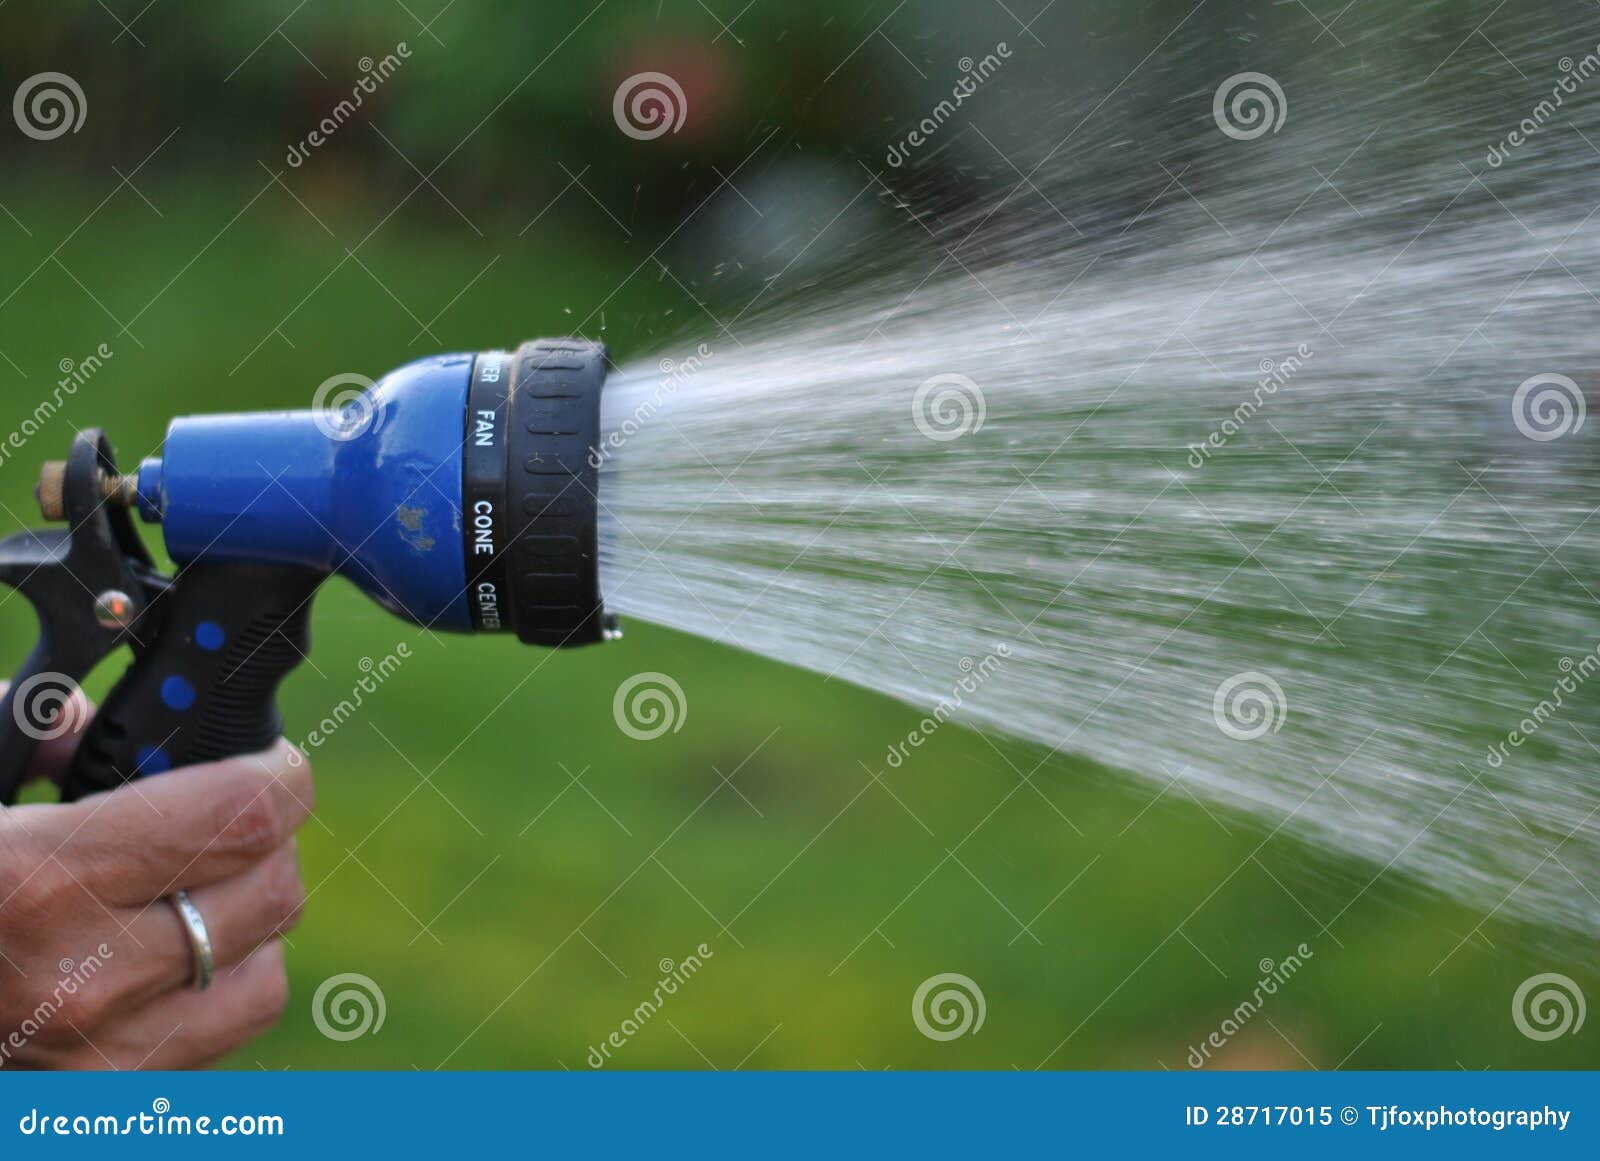 spraying garden hose